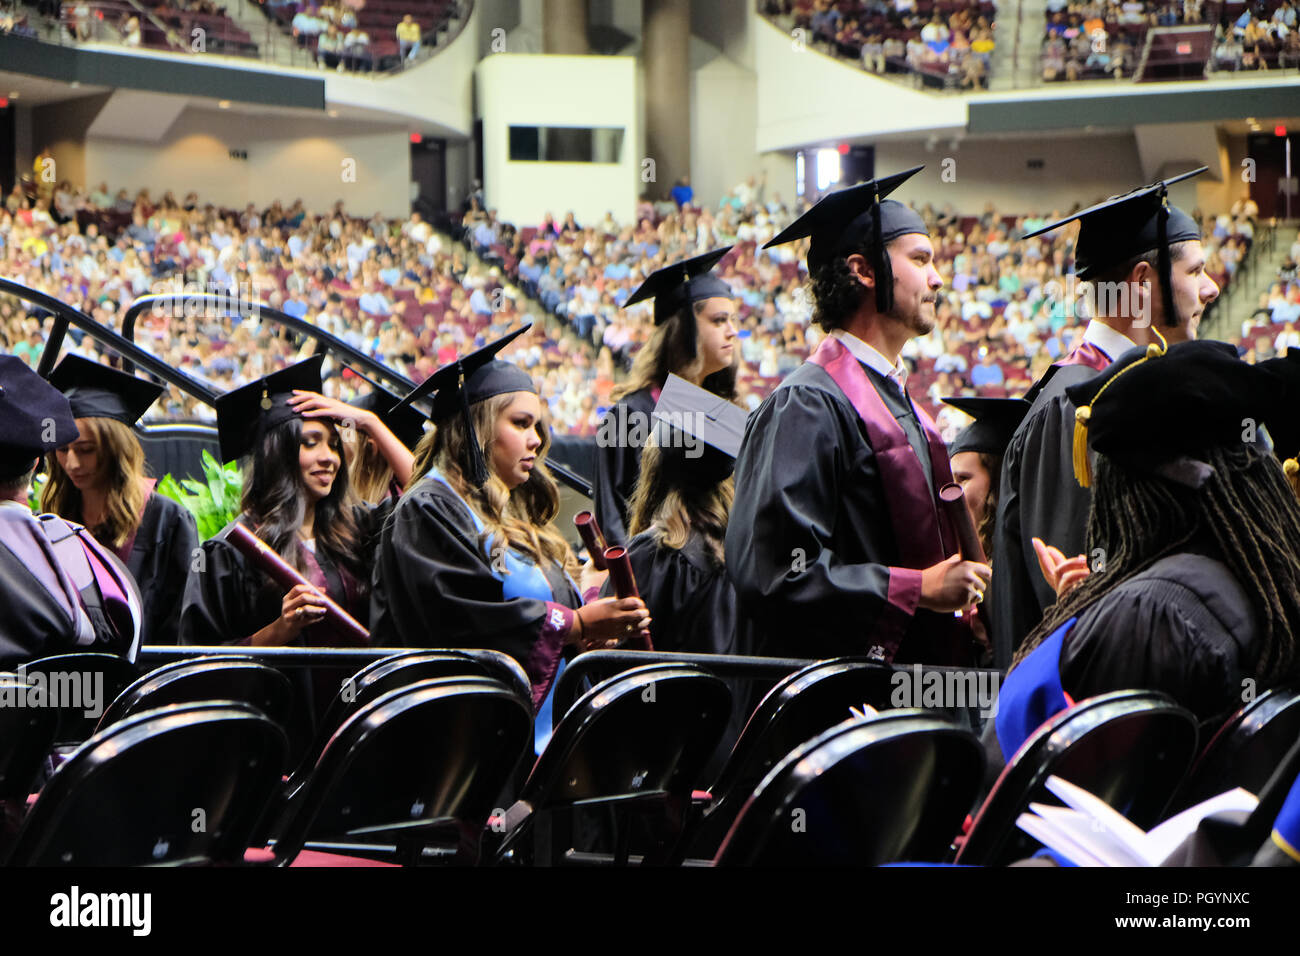 Students at an American university graduation. Stock Photo